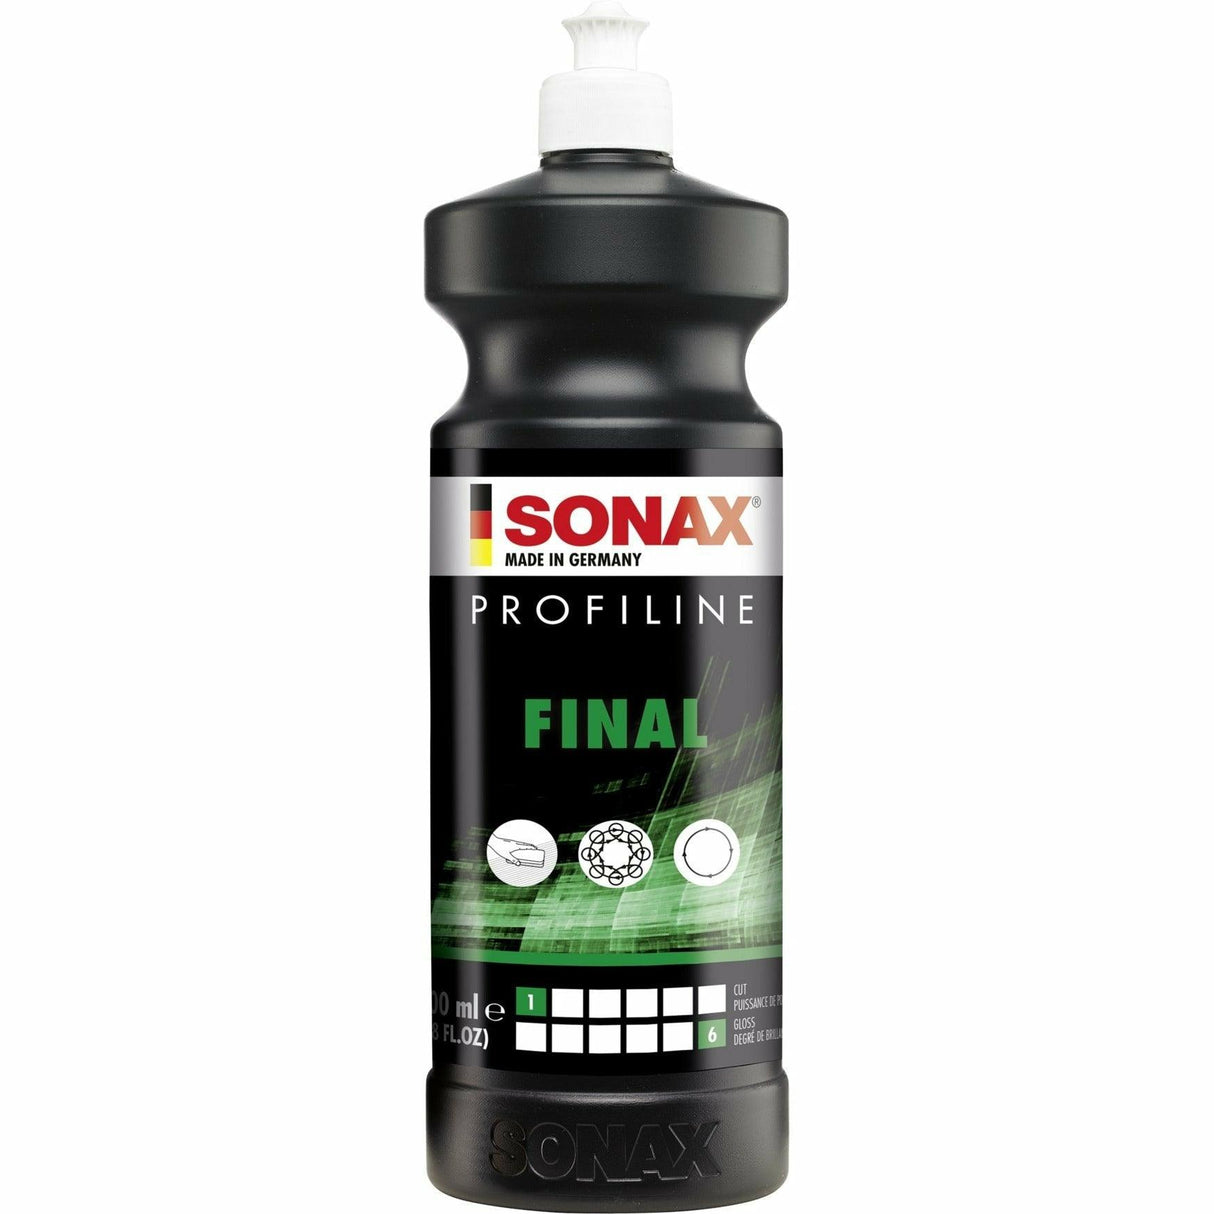 Sonax Profiline Final1L - Xpert Cleaning